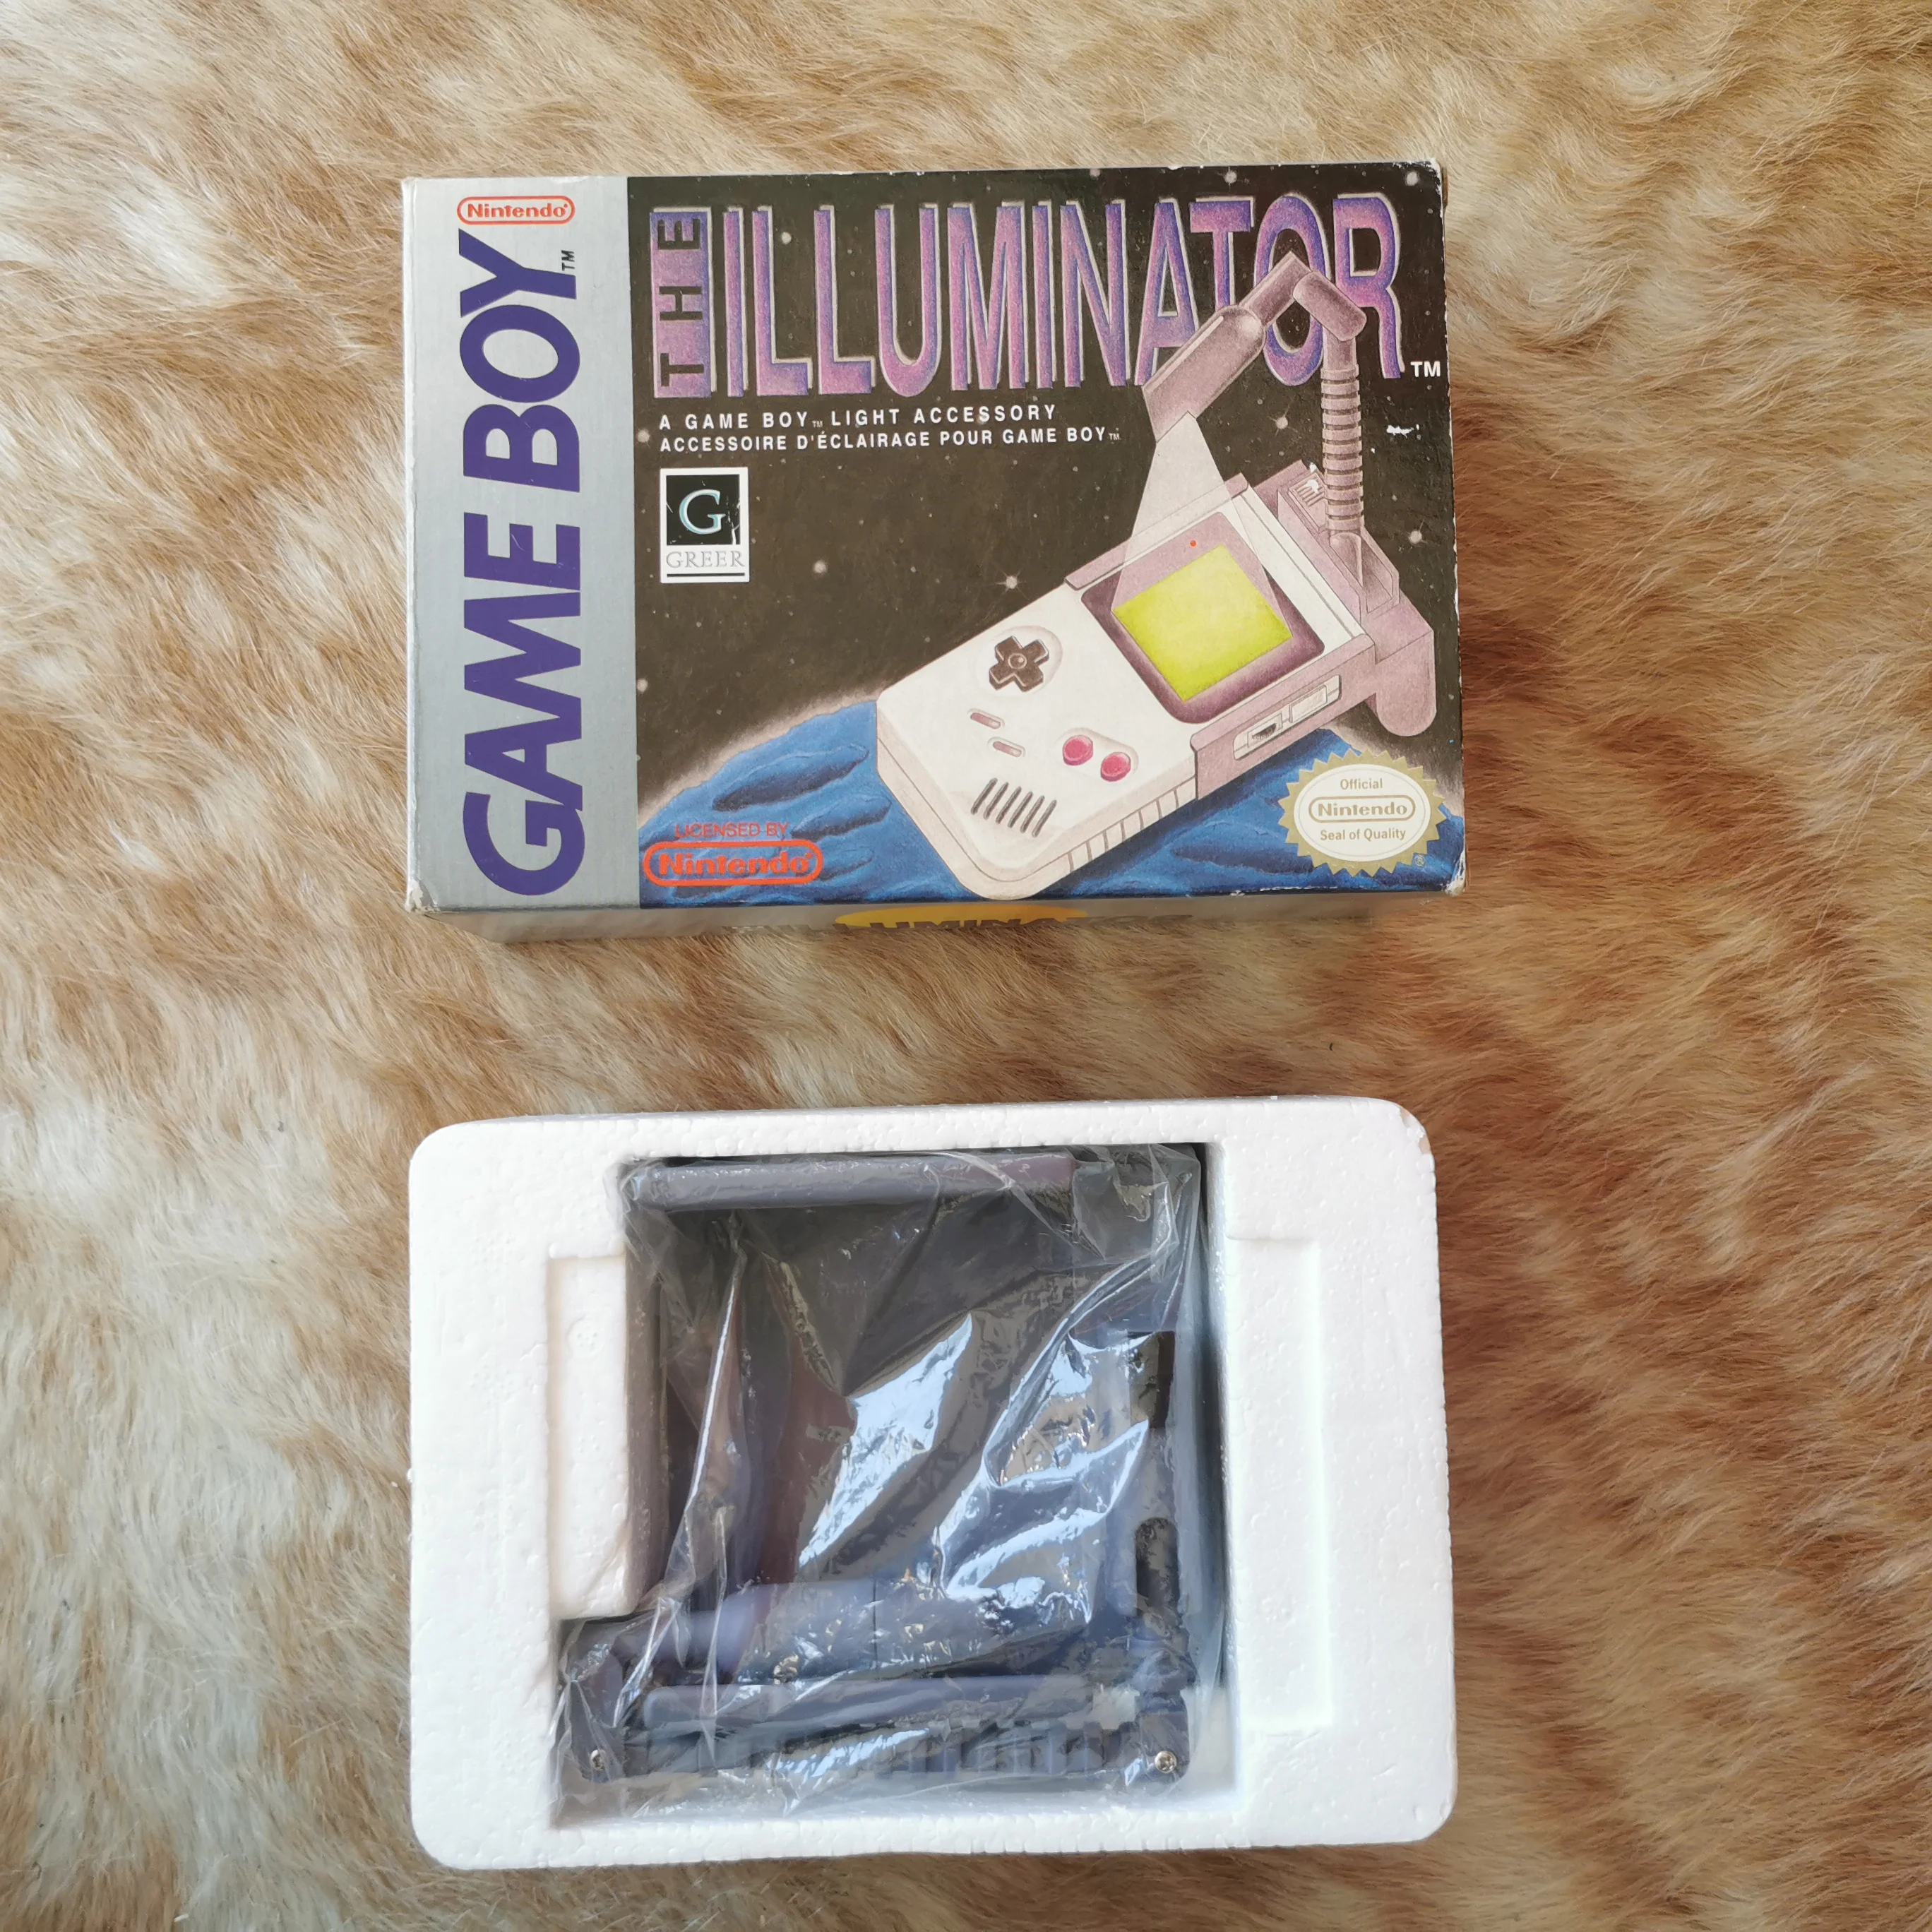  Greer Game Boy Illuminator